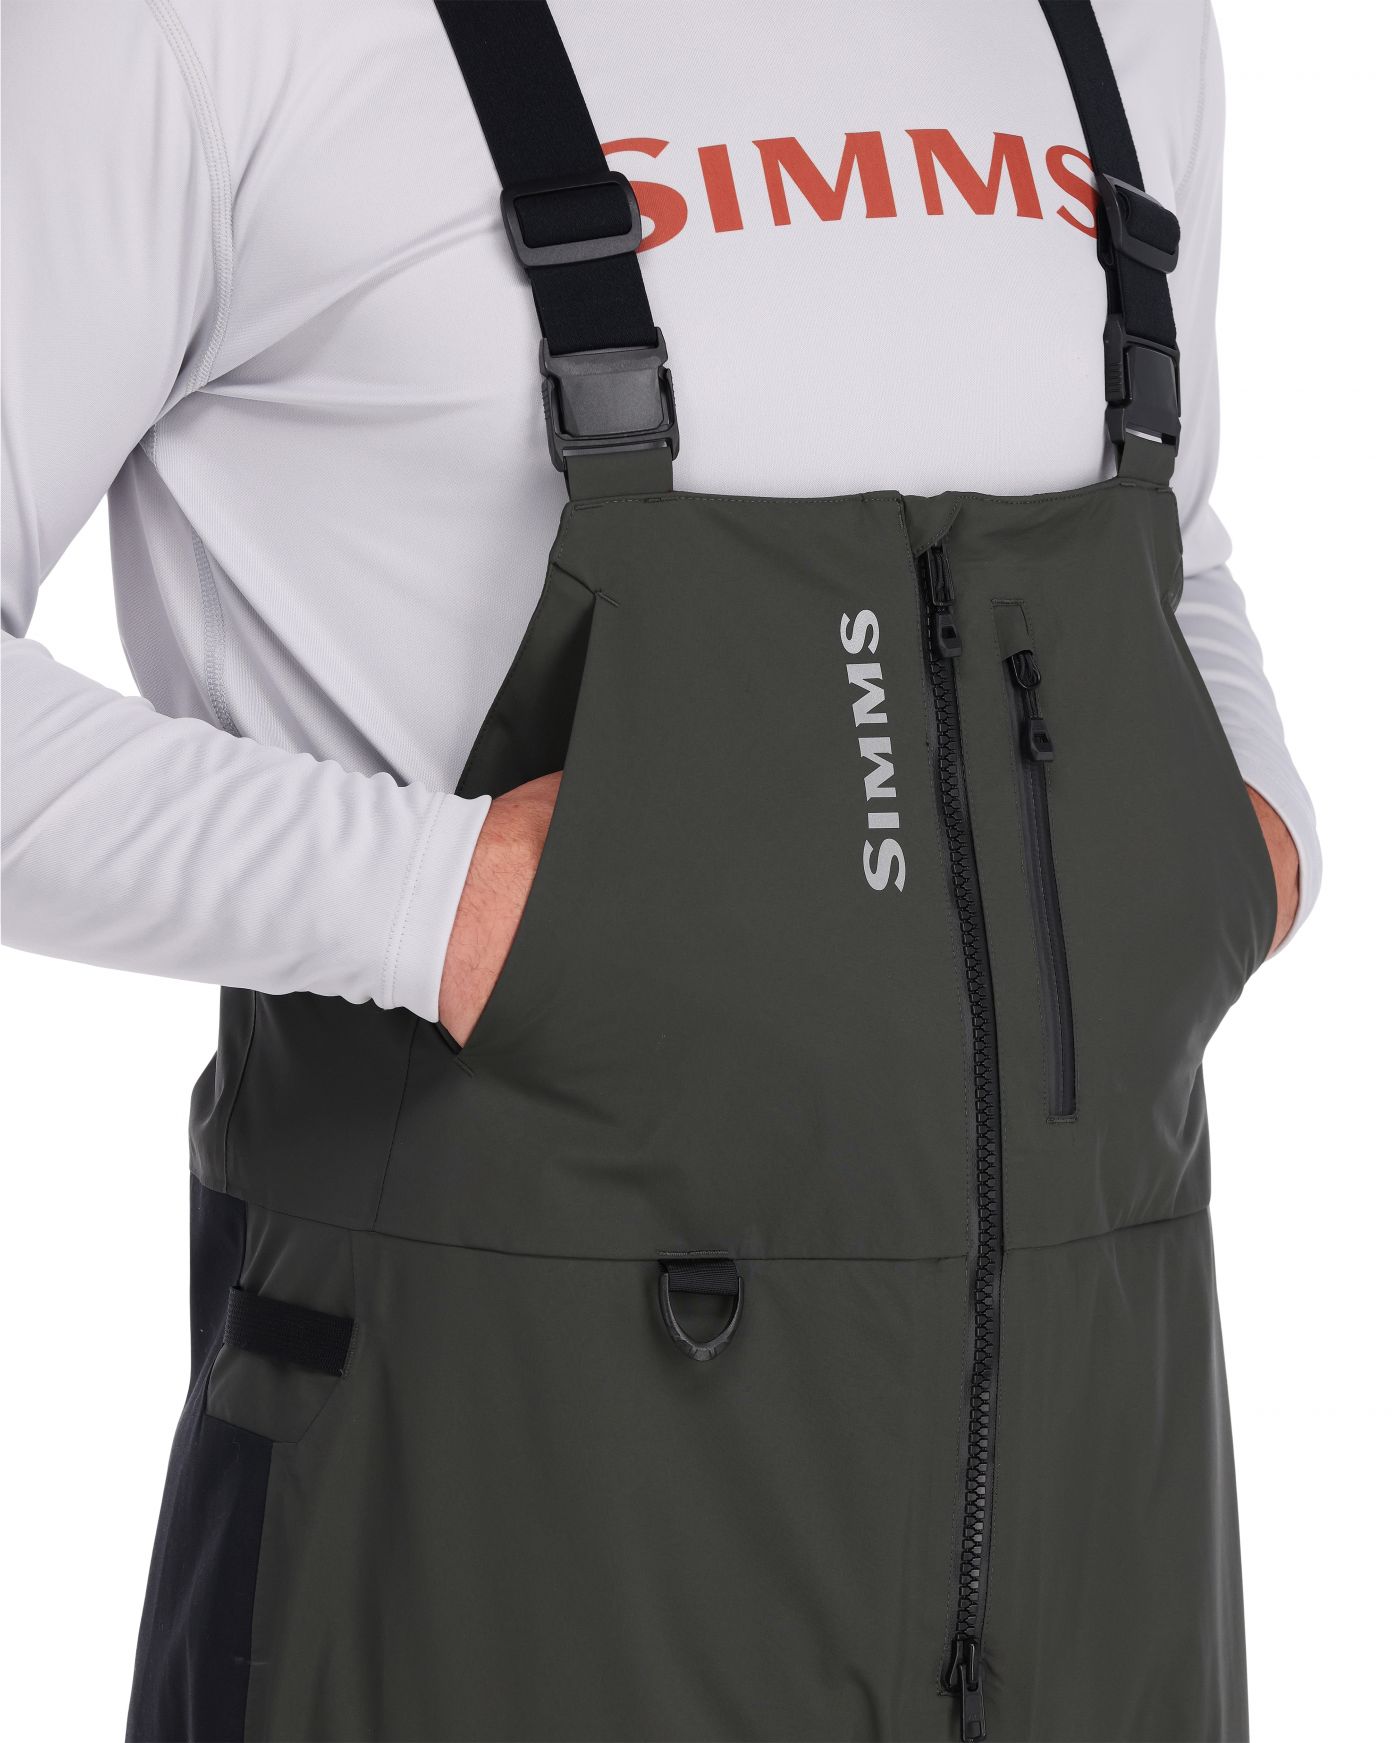 Simms 43961 Men's XL/TG Fishing Jacket & StormSkin Blackfish BF10855 Bib  Pants